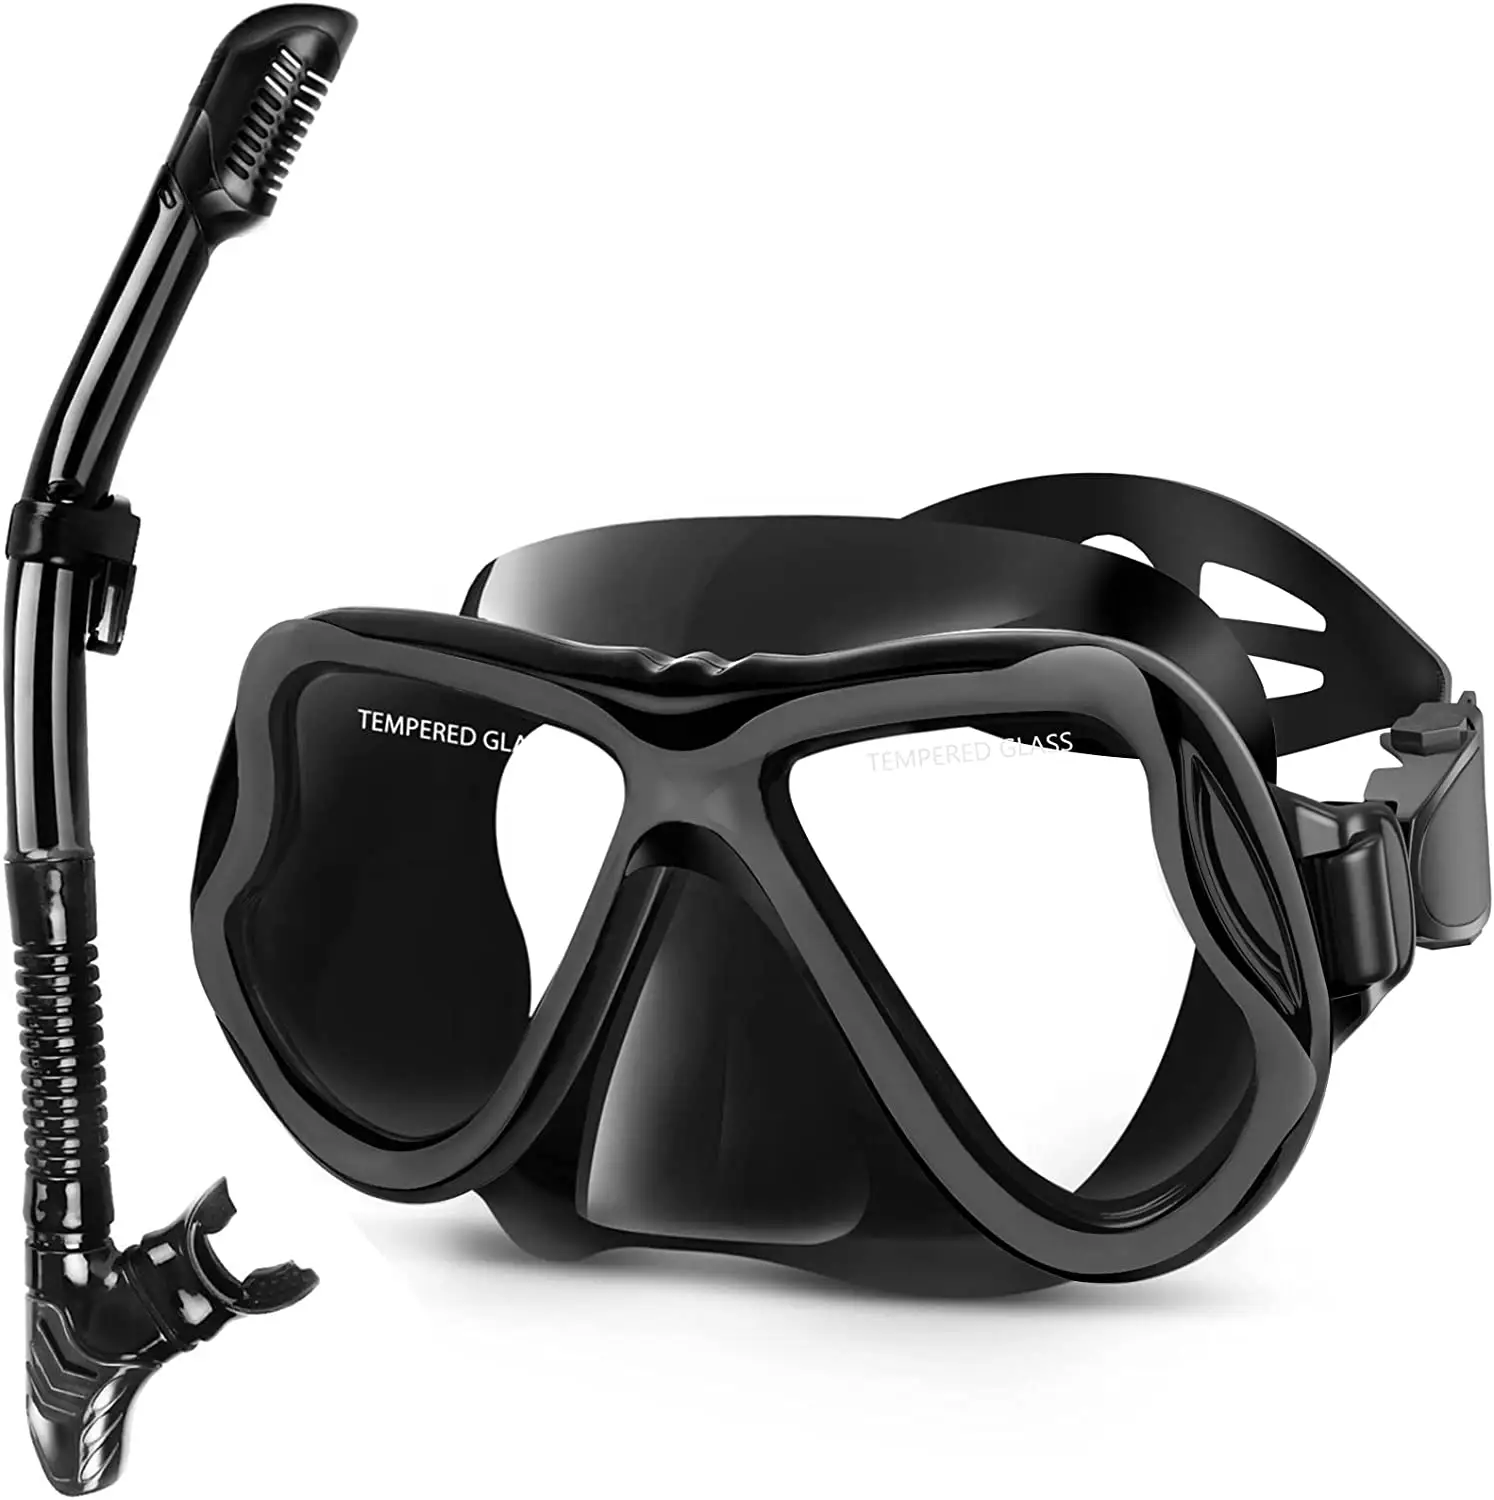 Panoramic Wide View Dry anti-Fog Professional Scuba Diving Mask diving glasses Snorkel Set